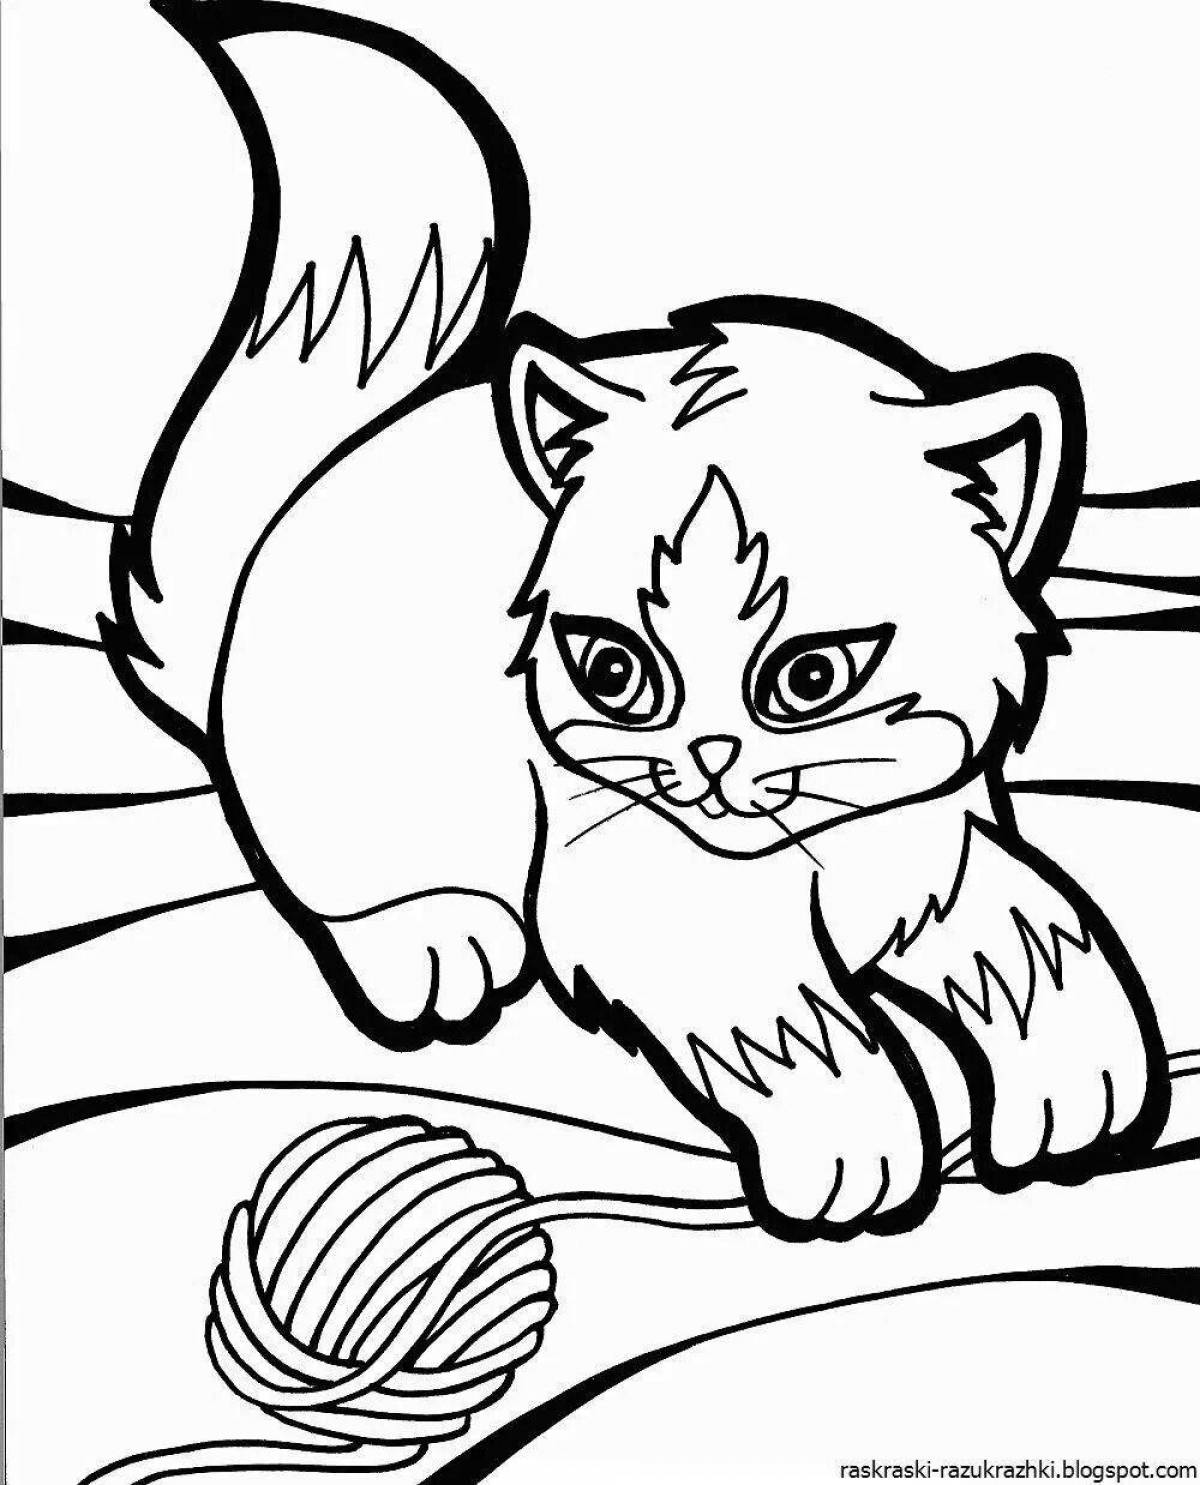 Playful kitten drawing for kids